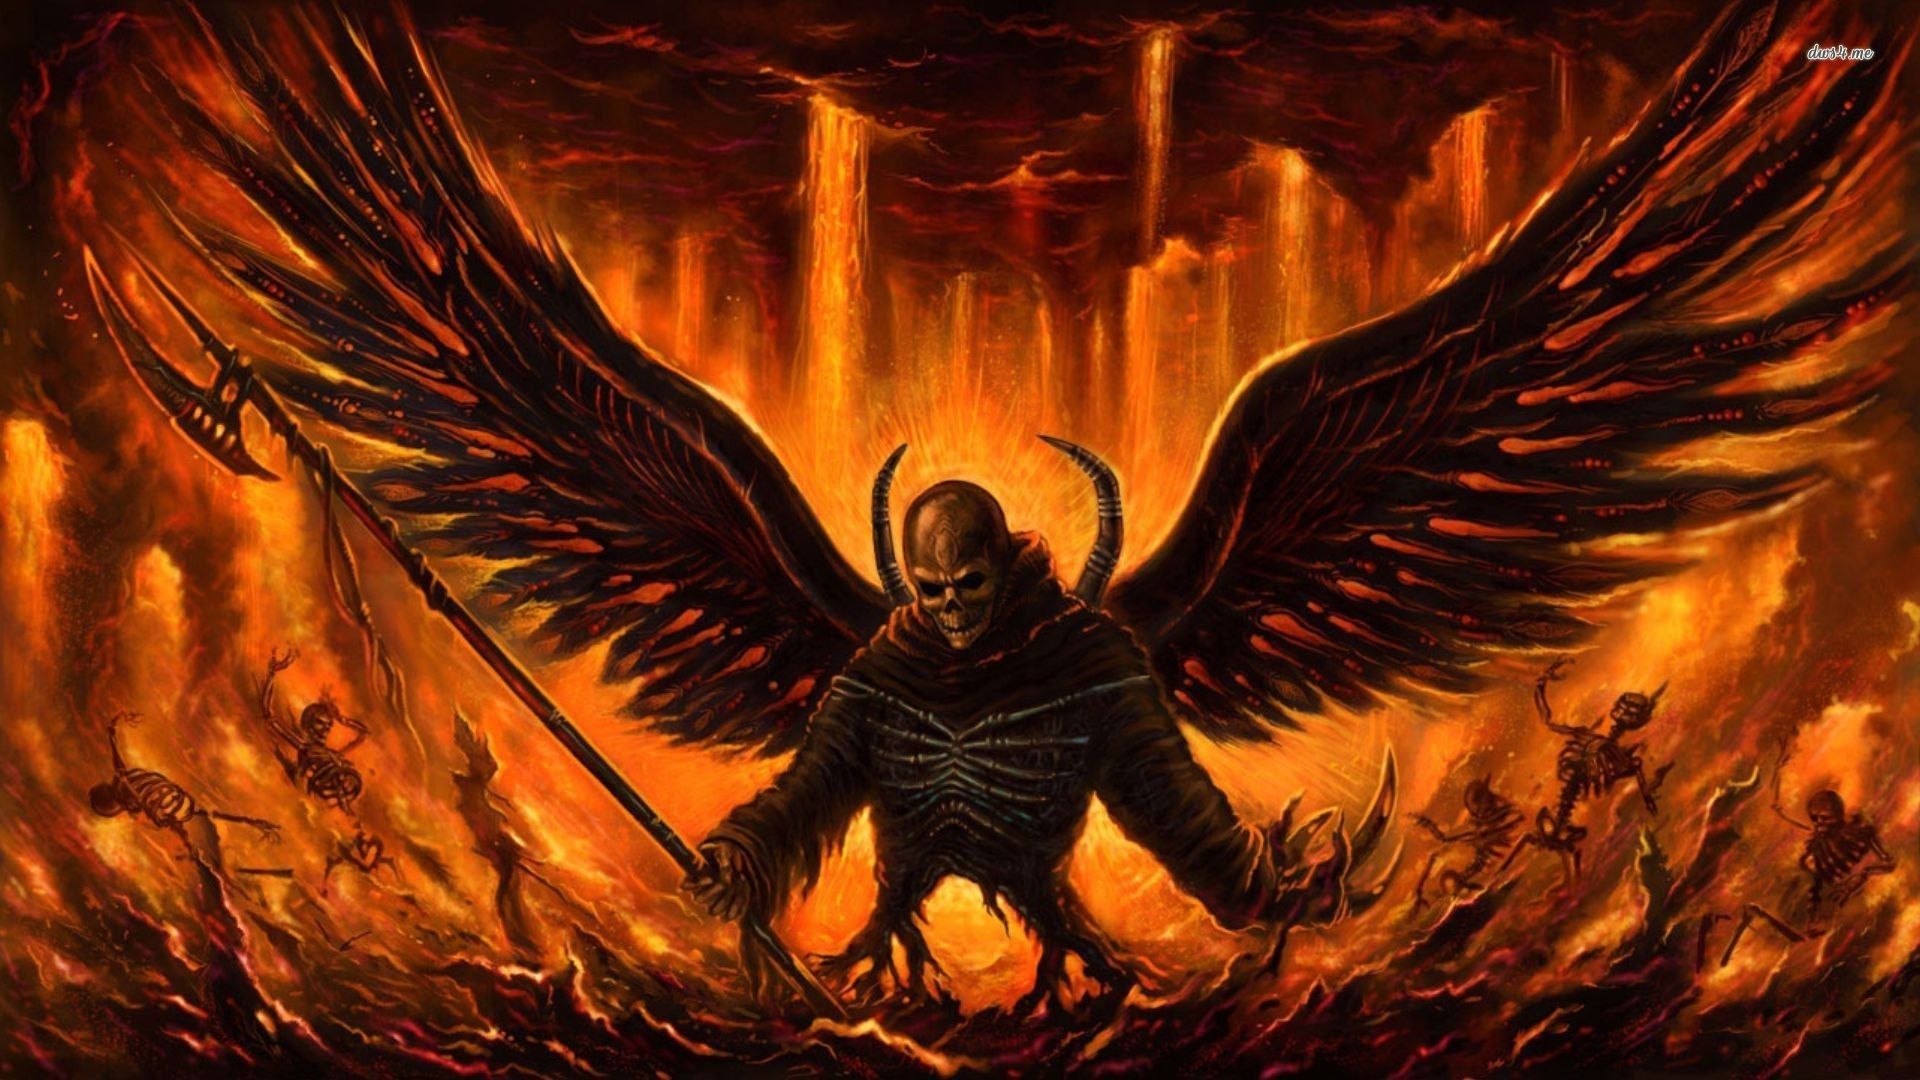 Devils angel wallpaper - Fantasy wallpapers -